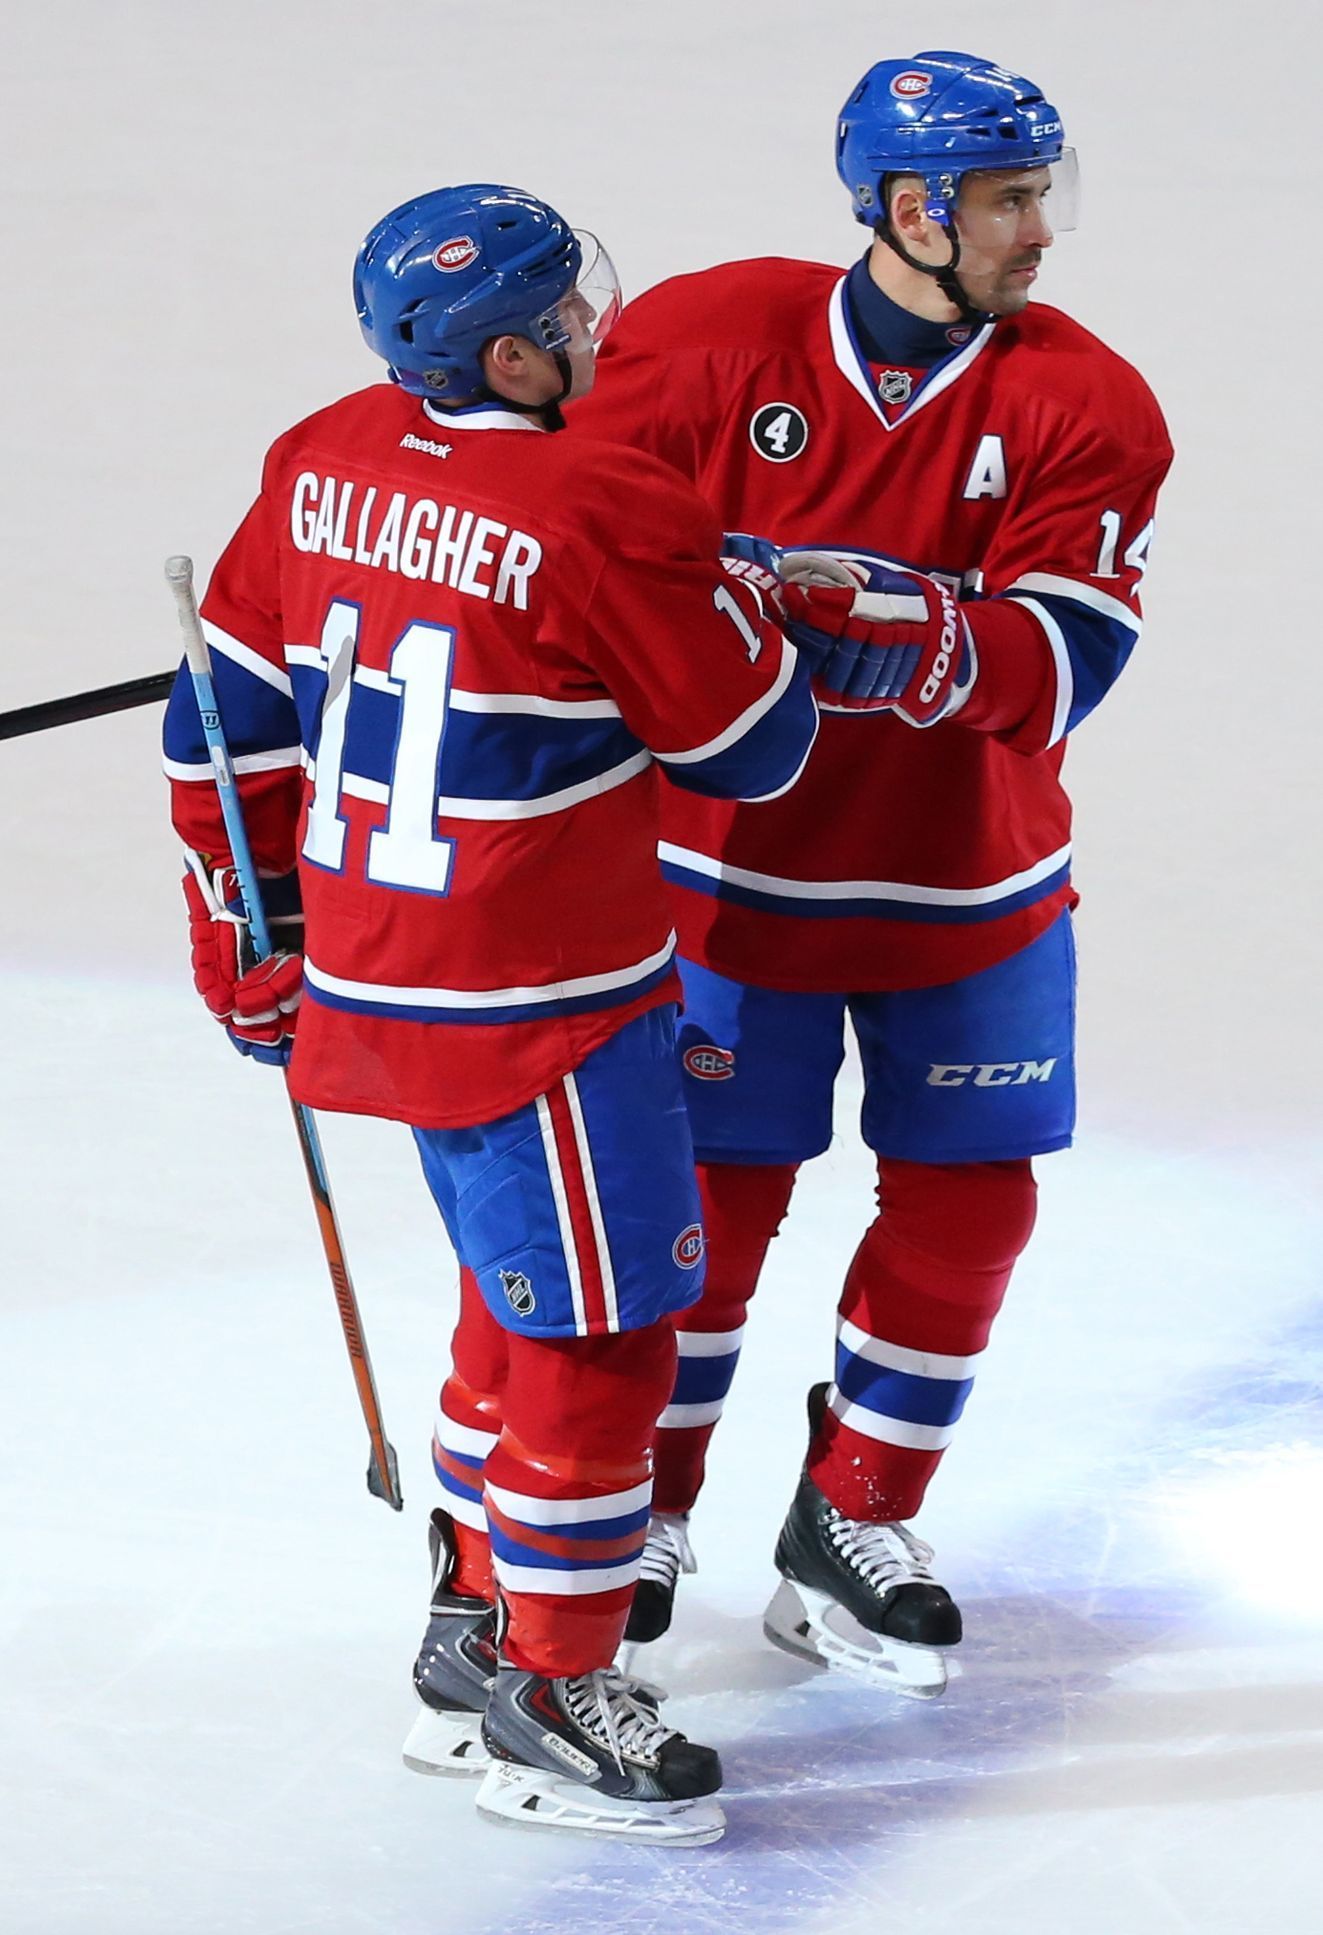 Tomáš Plekanec a Brendan Gallagher  (Montreal Canadiens)